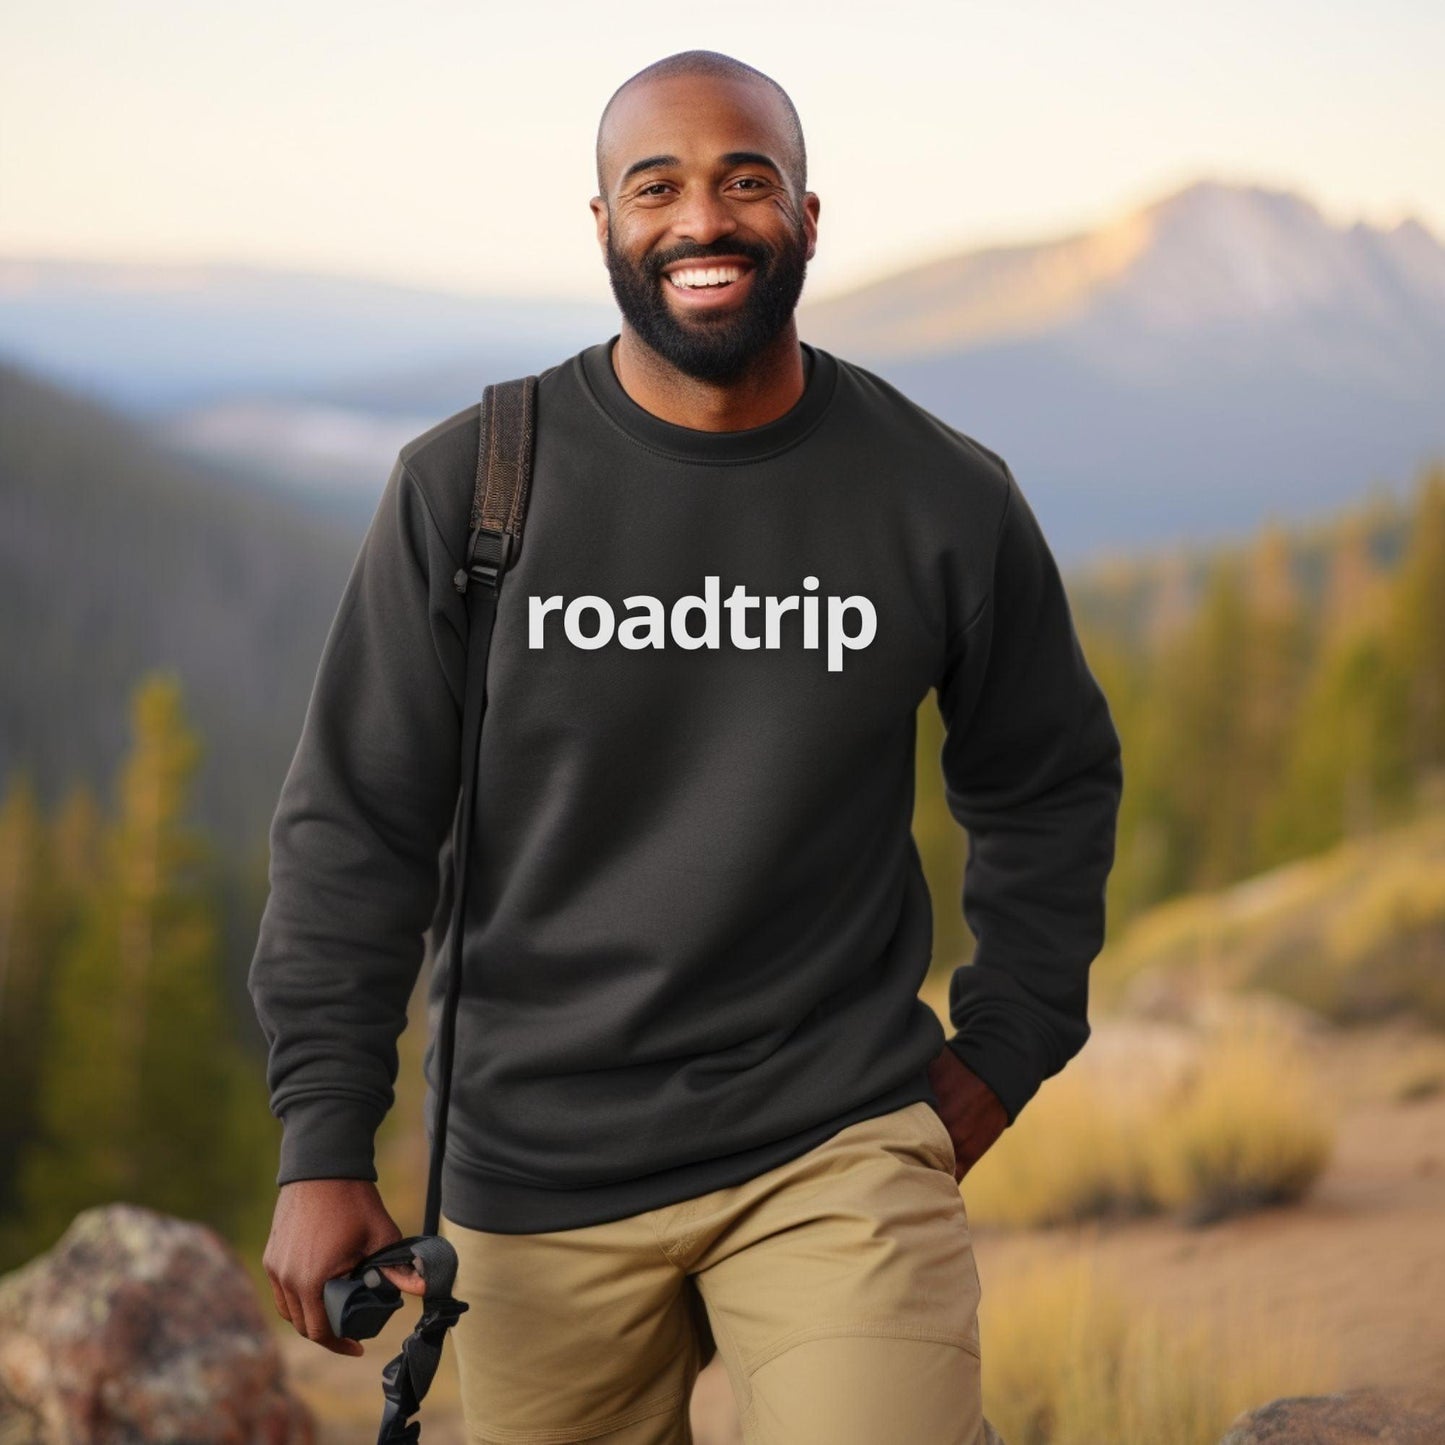 Roadtrip Premium Sweatshirt - Adventure Threads Company